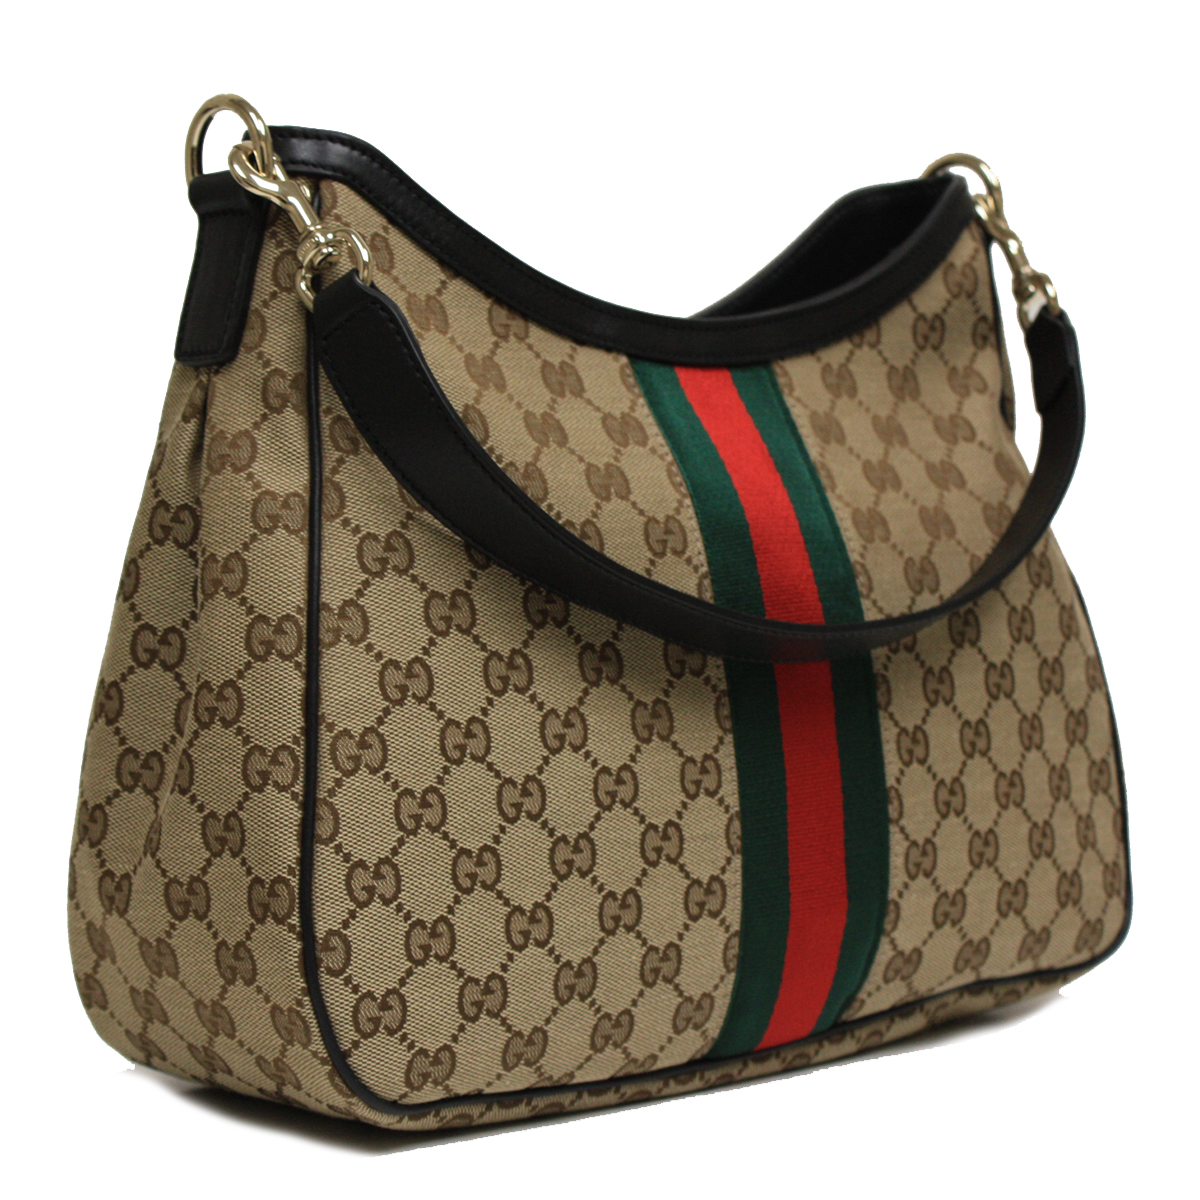 Gucci Canvas Monogram Hobo Handbag with Silver Metallic Straps |  Exquisitely Detailed